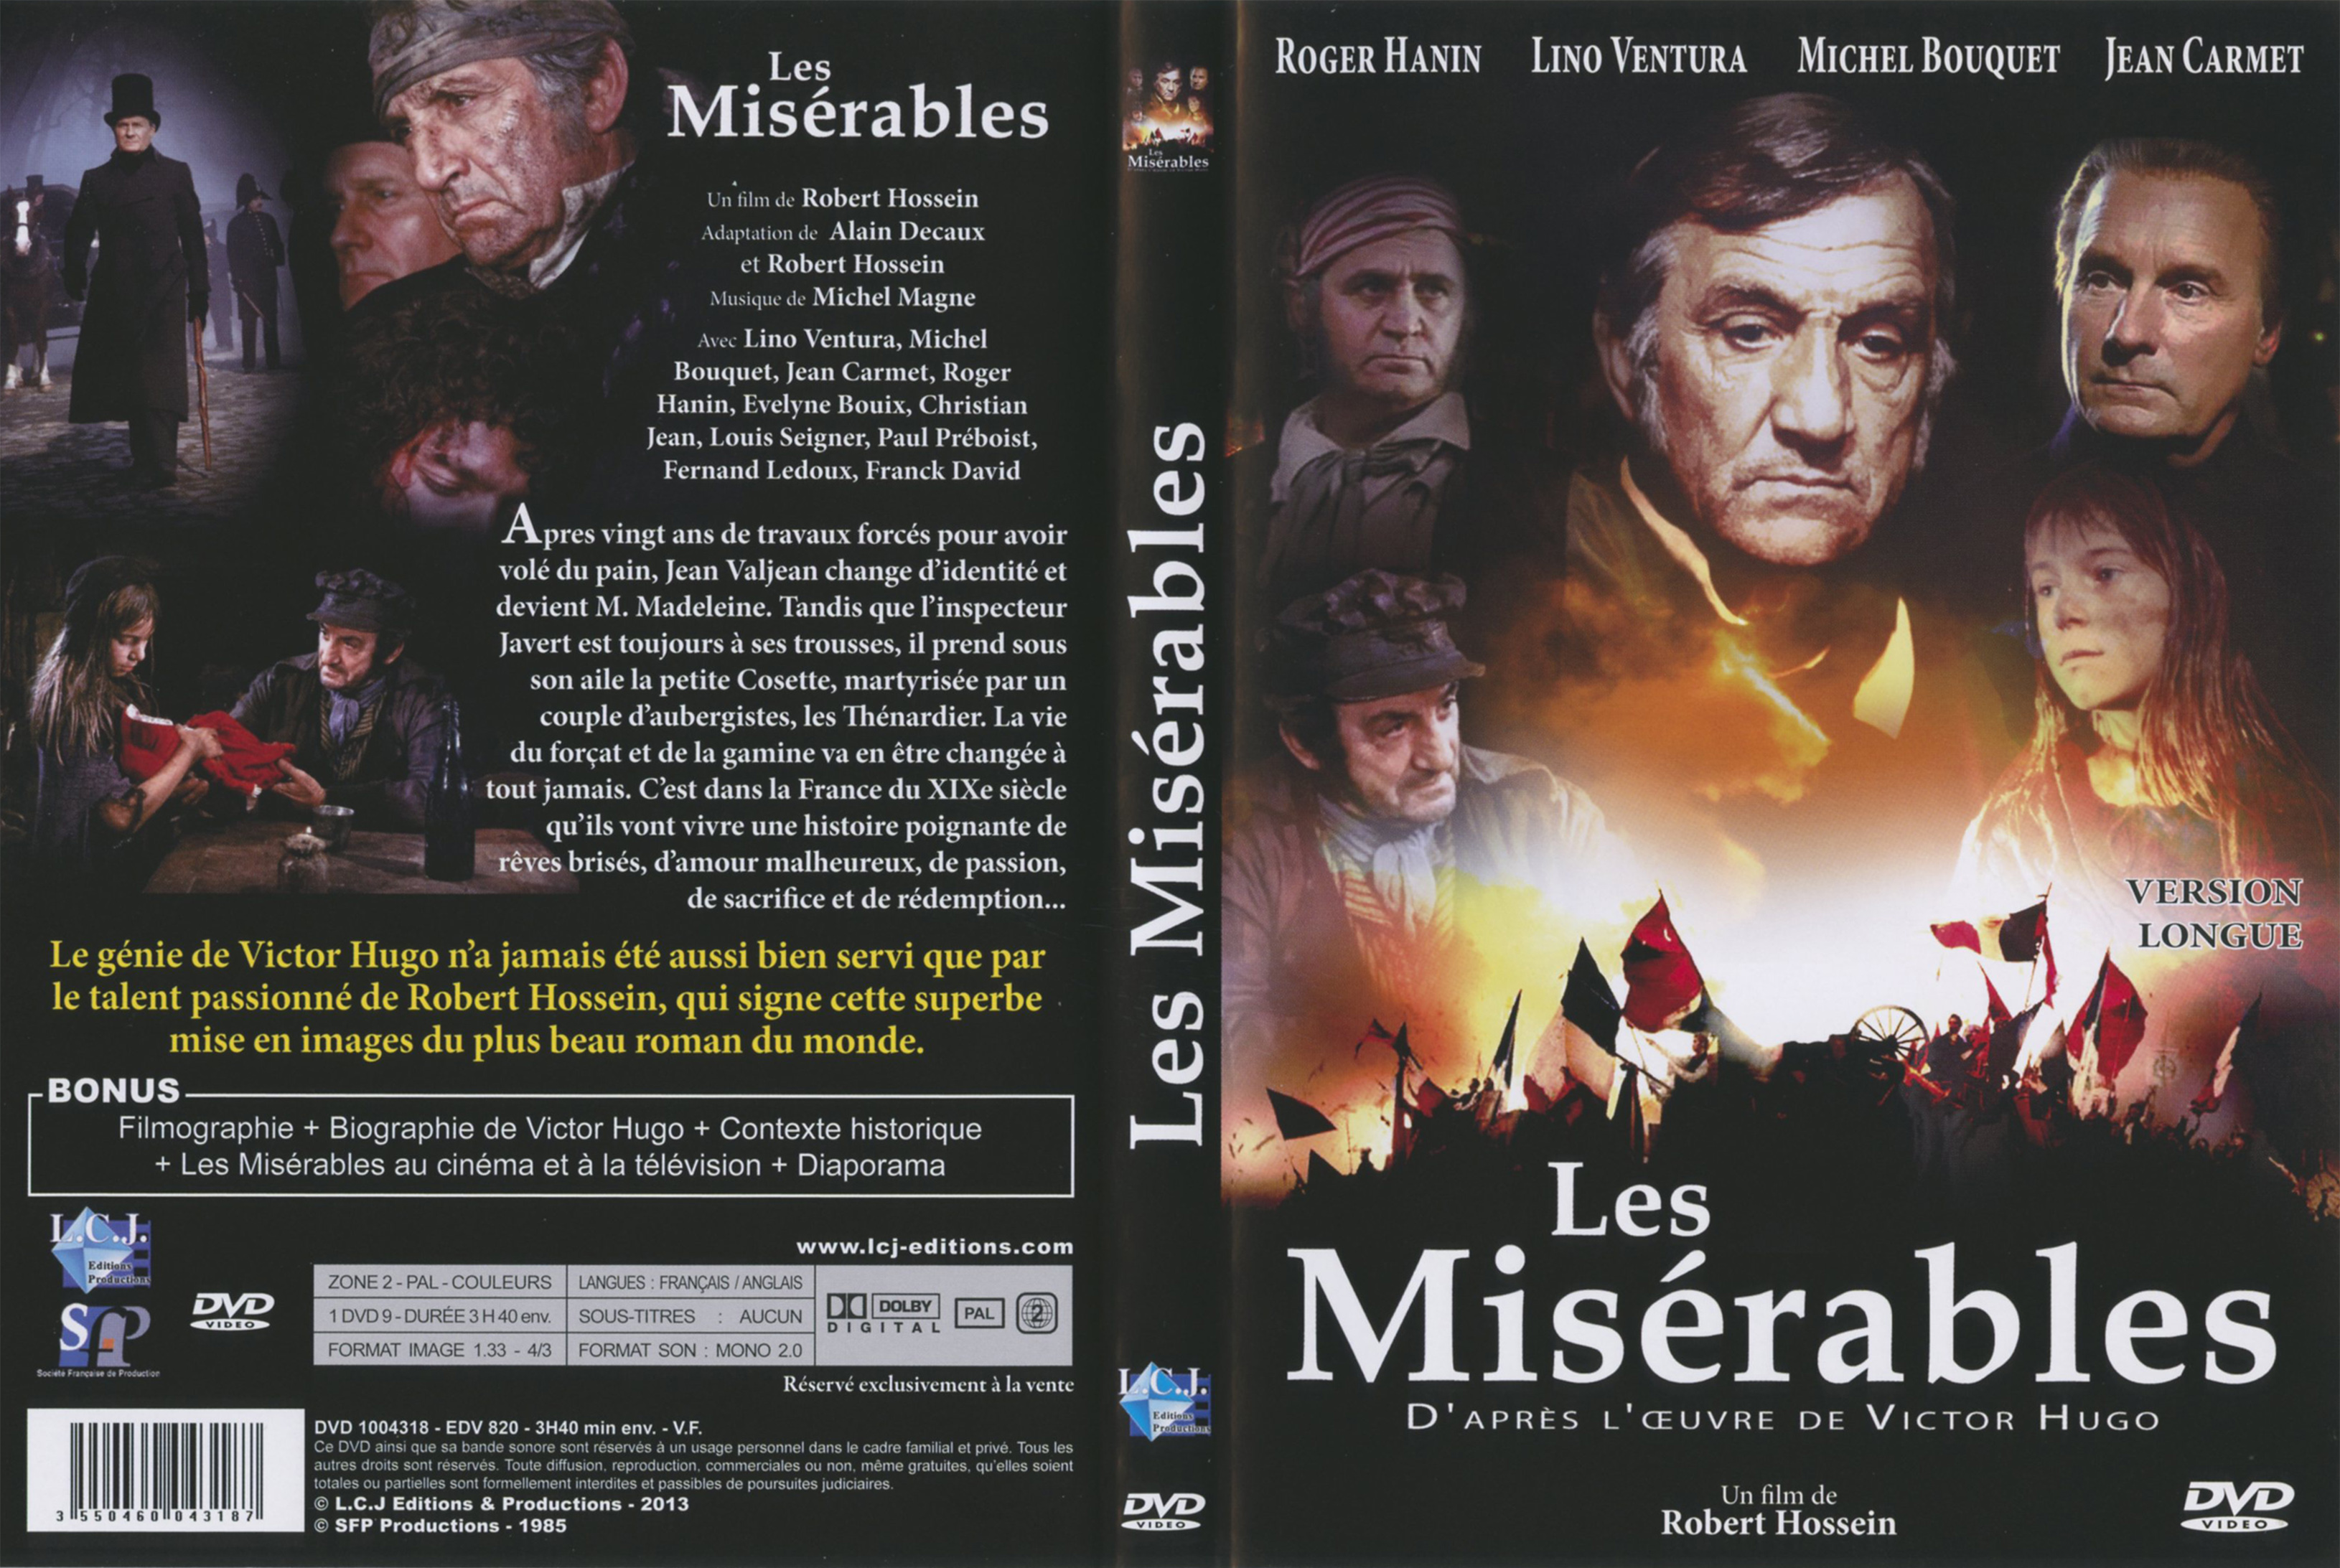 Jaquette DVD Les misrables (Ventura) v4